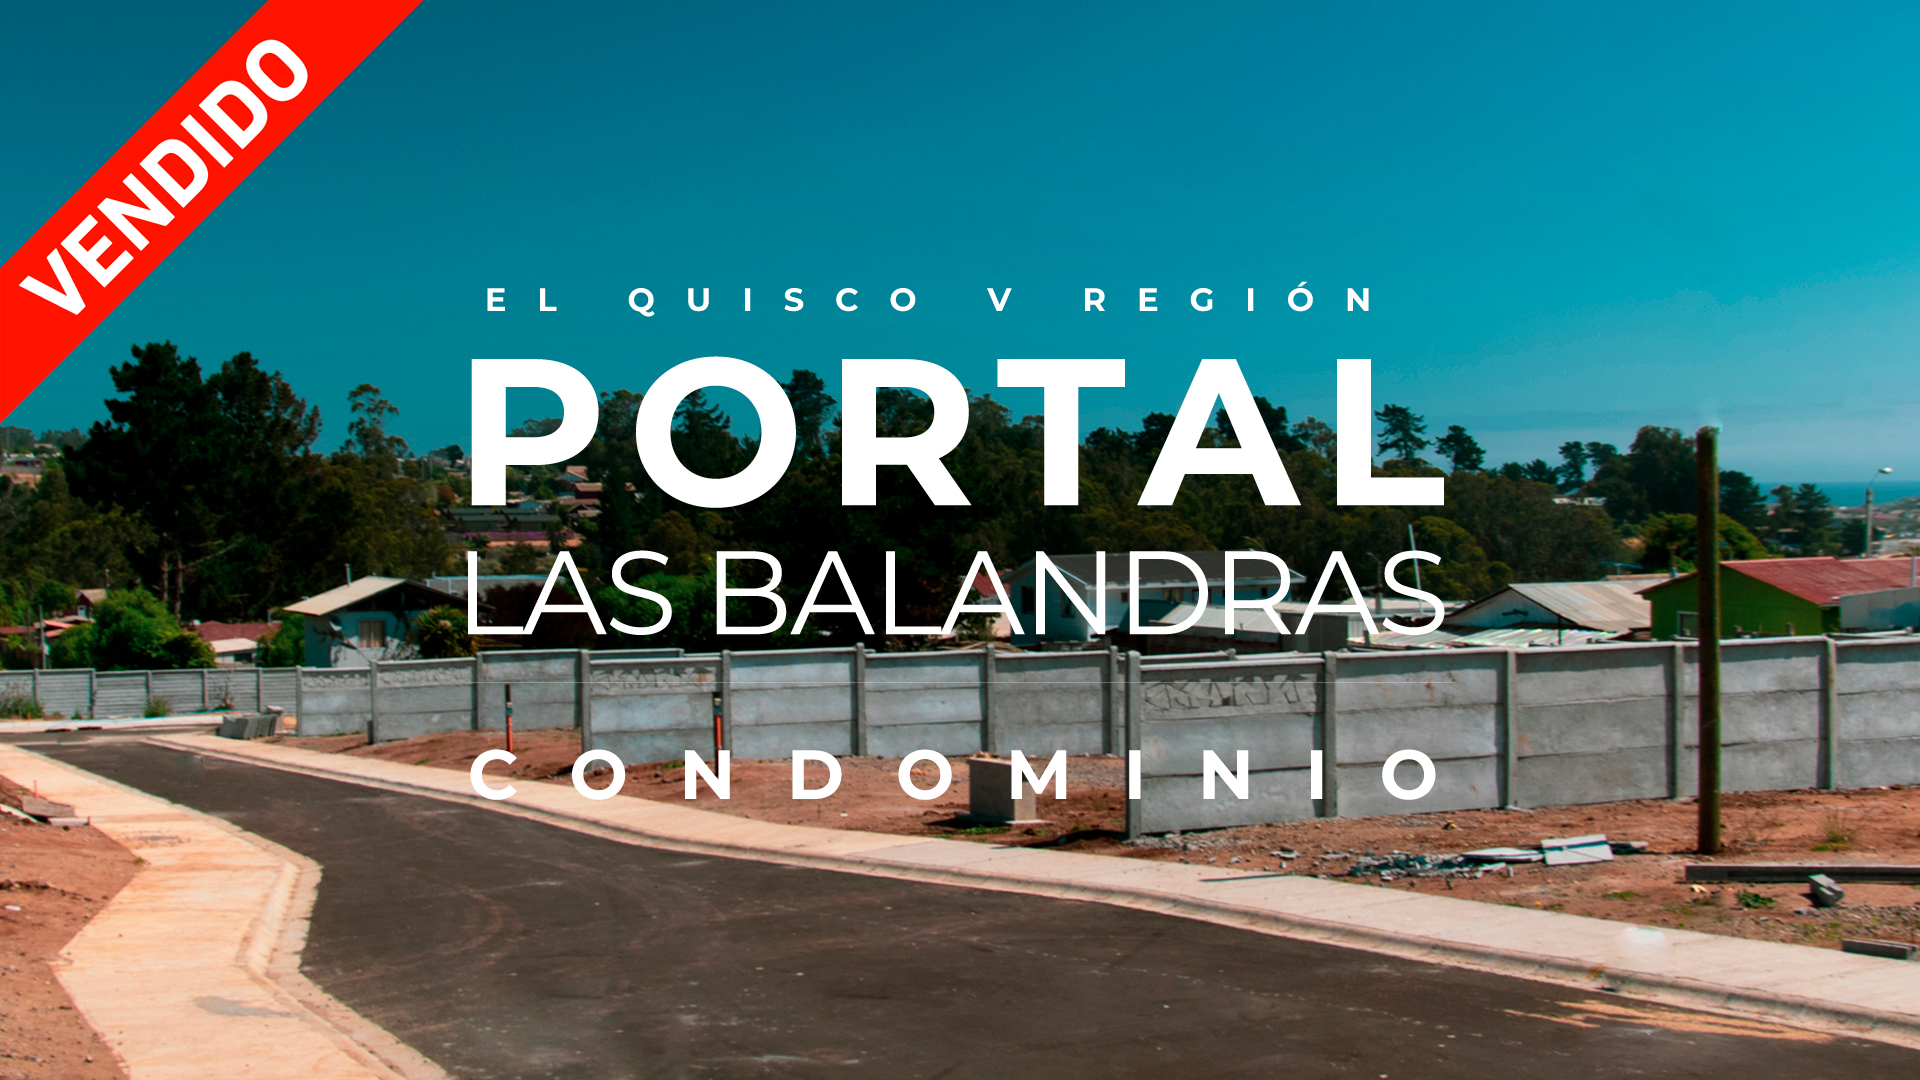 Condominio Portal Las Balandras